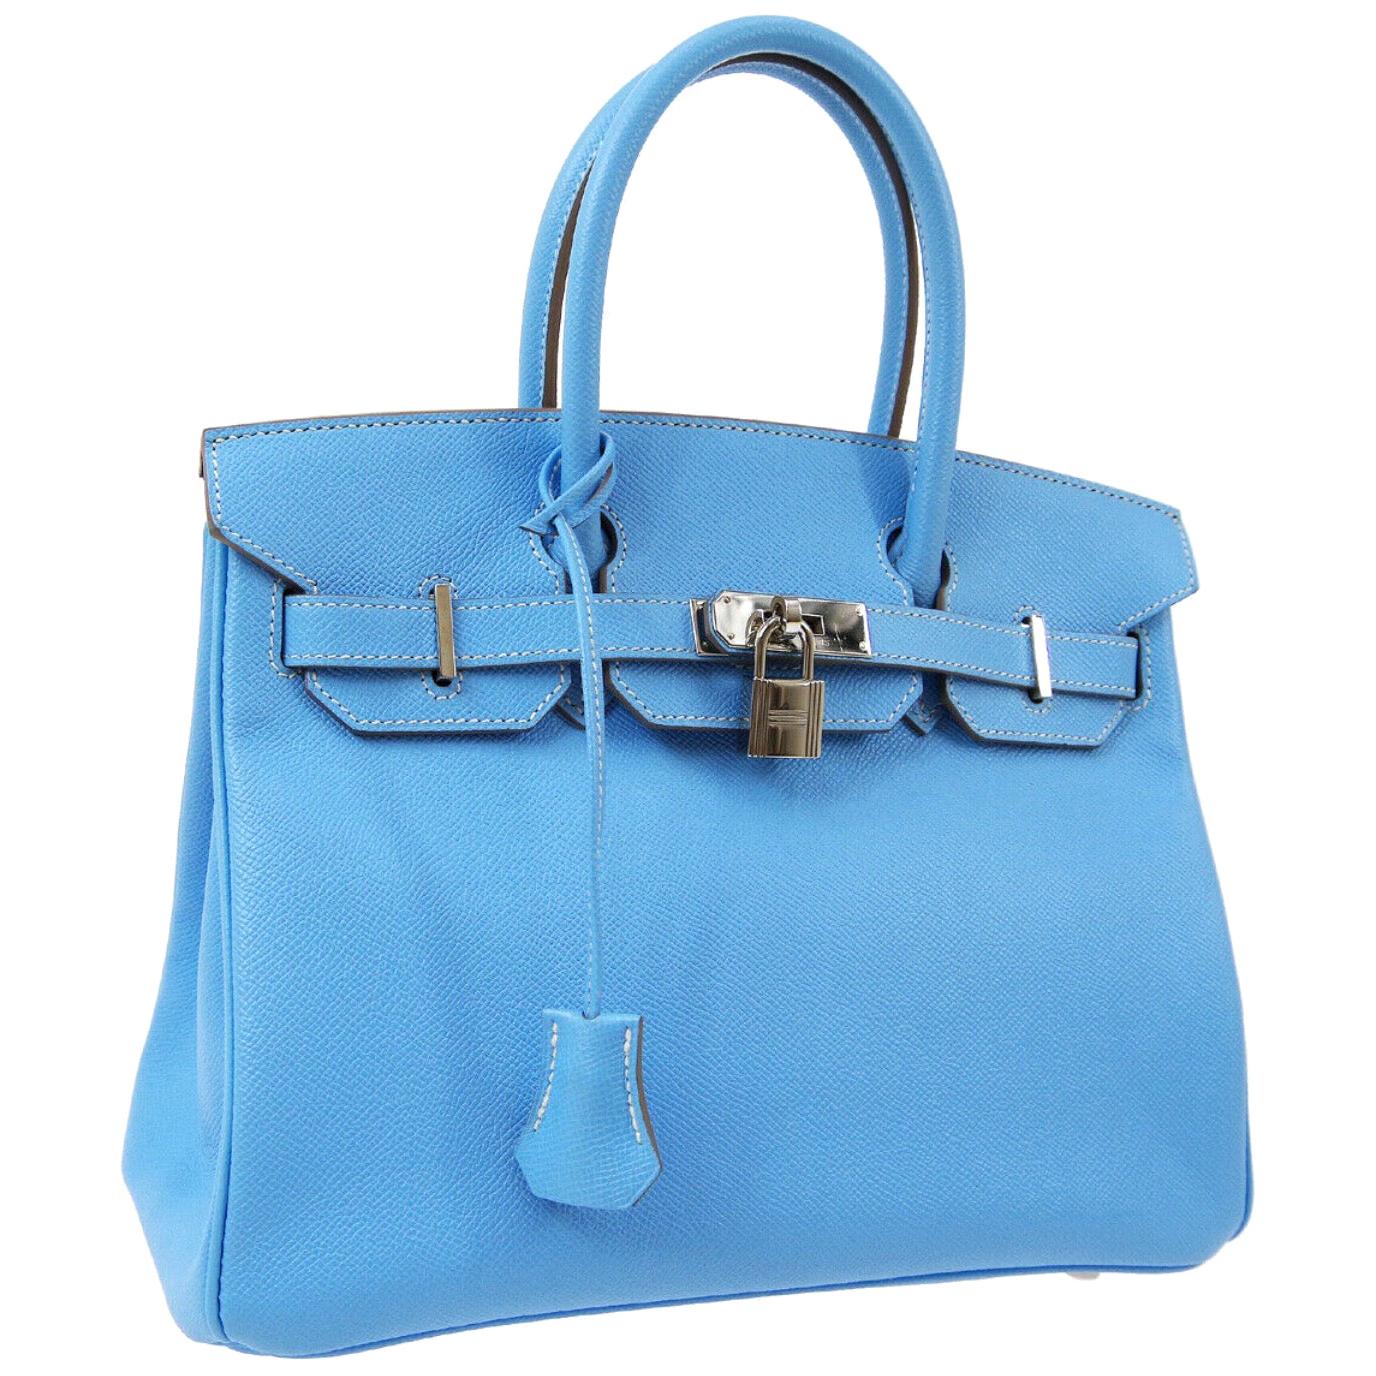 Hermes Birkin 30 Baby Blue Leather Silver Exotic Top Handle Satchel Tote Bag